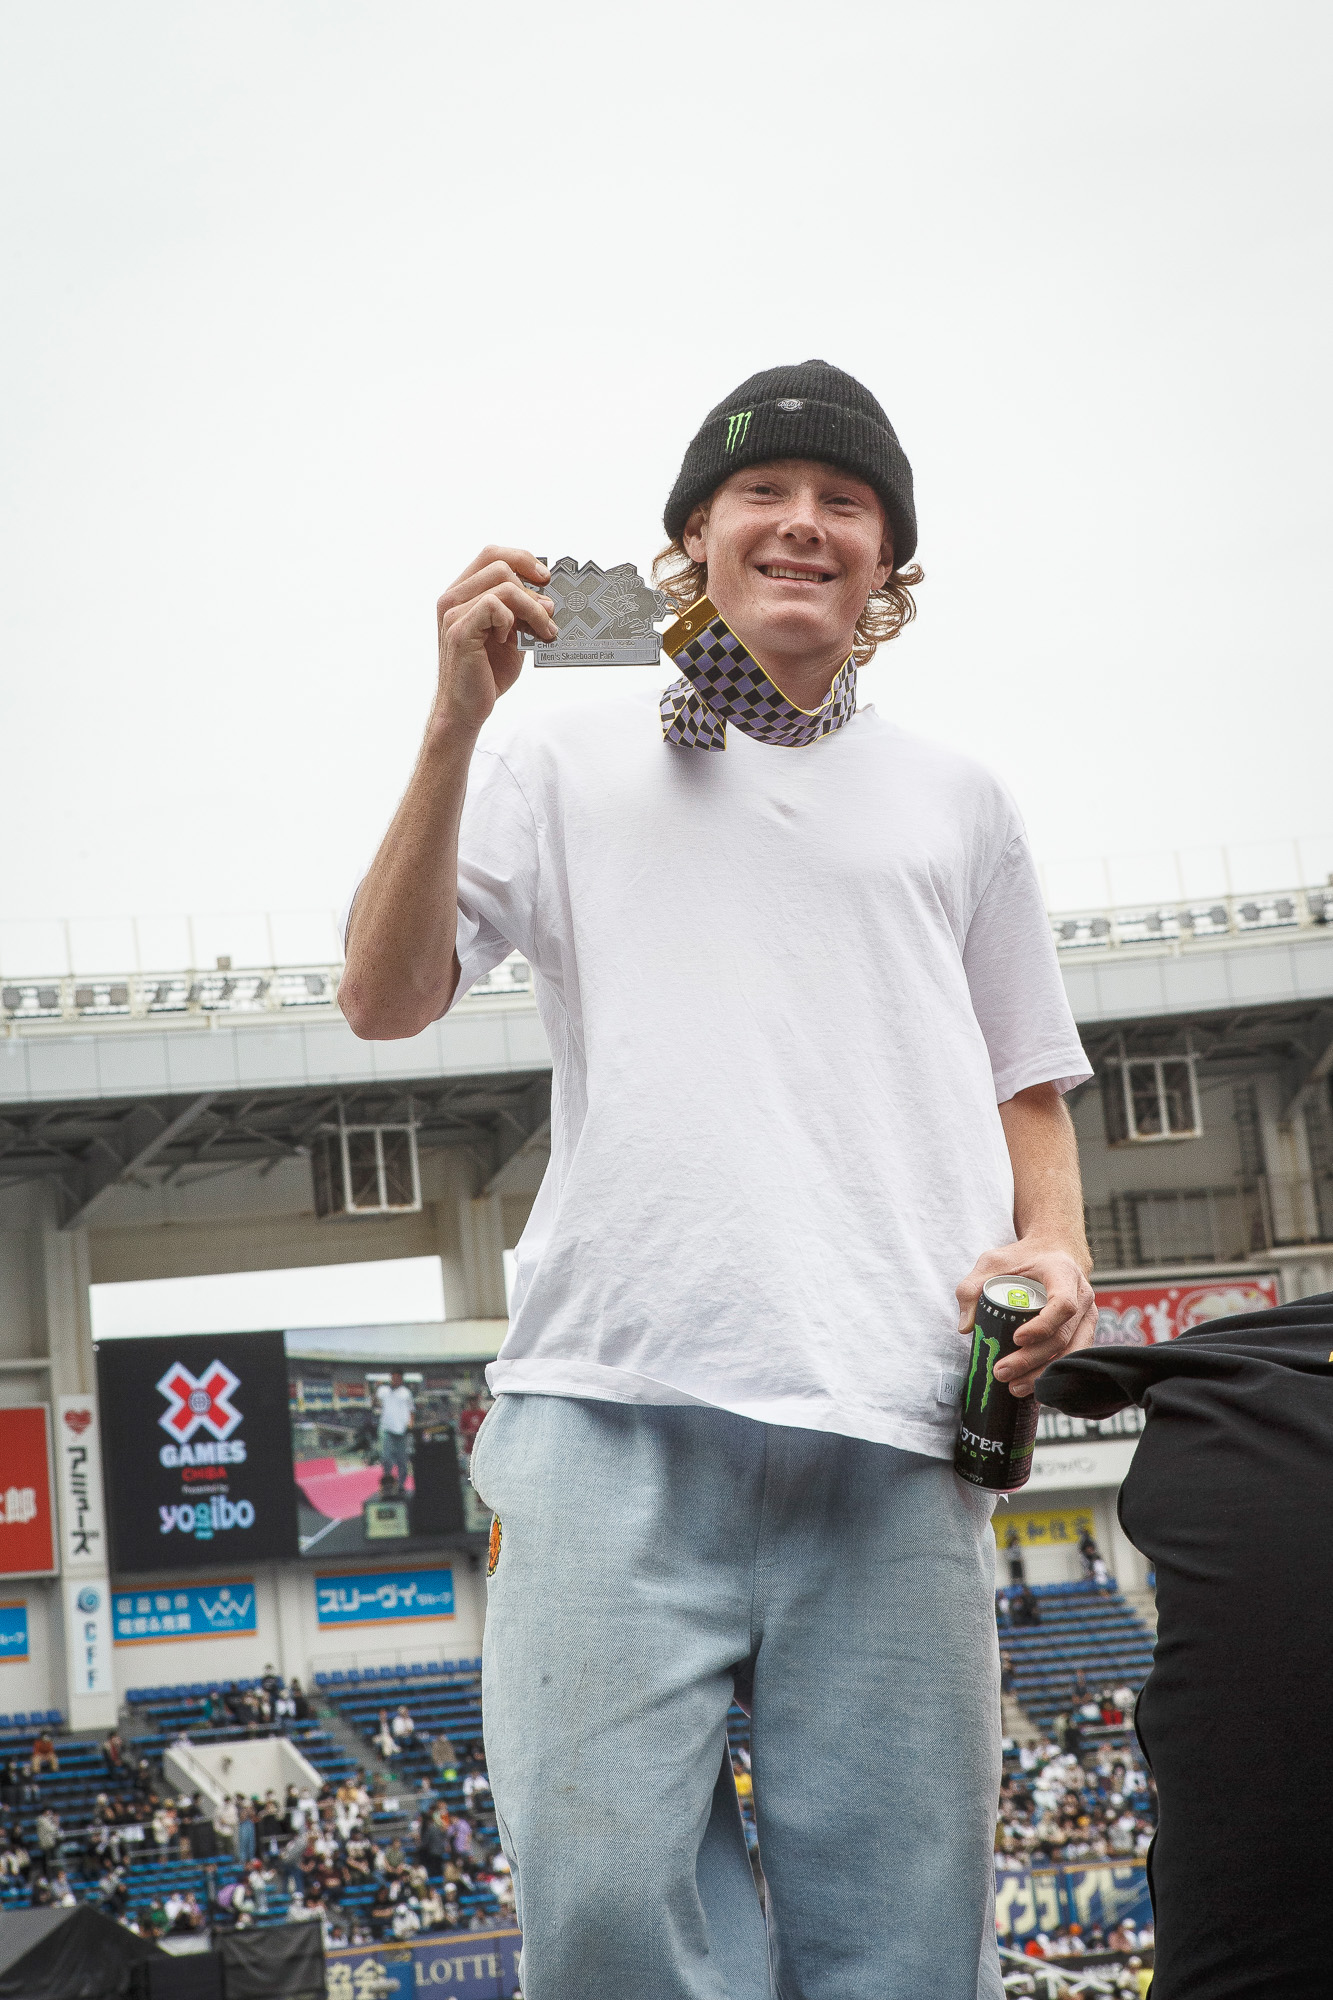 Monster Energy's Kieran Woolley Wins Silver in Men’s Skateboard Park at X Games Chiba 2022